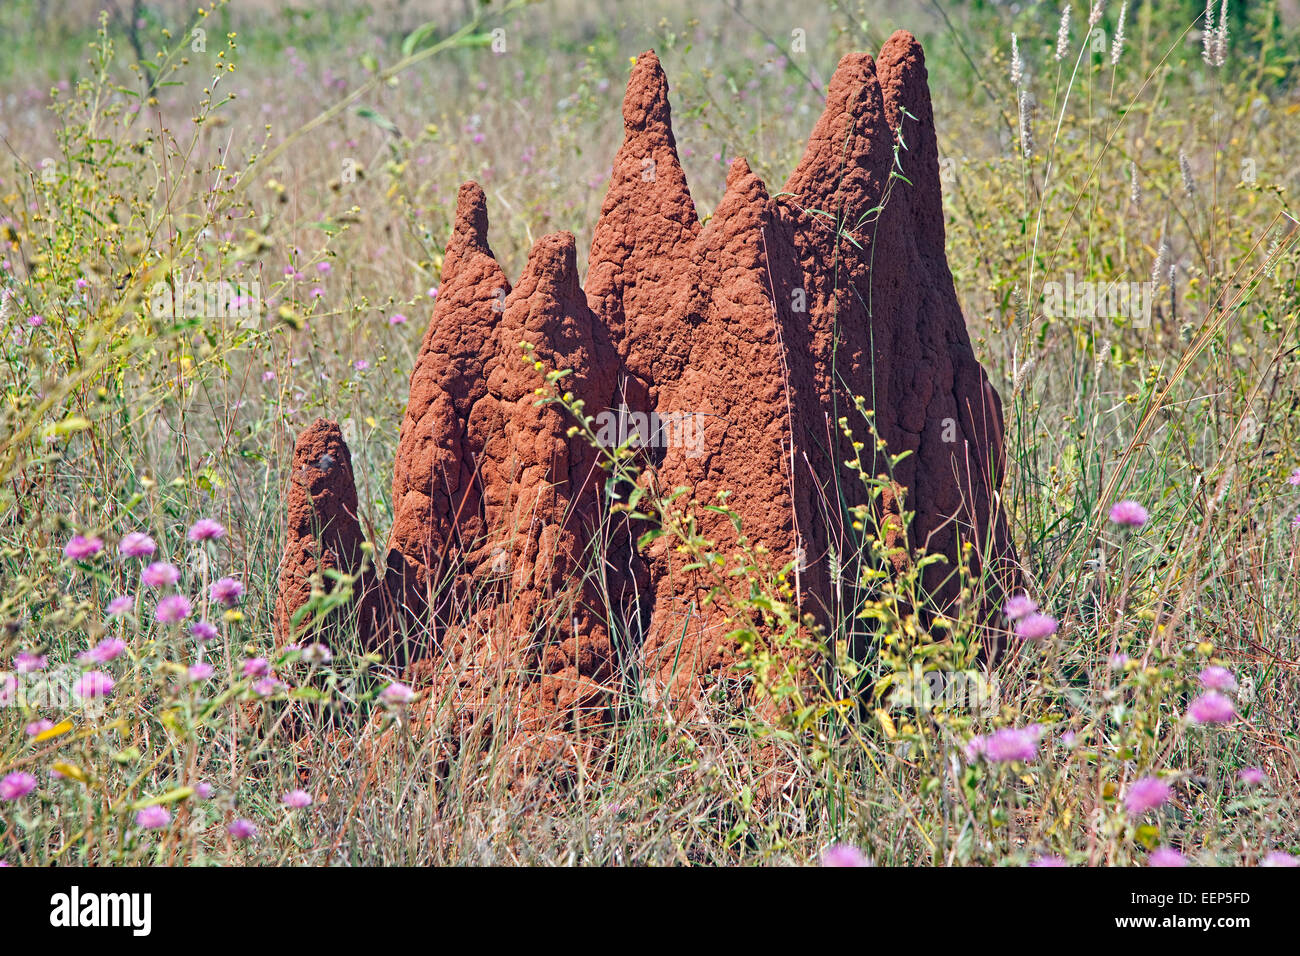 Termite mound in the Australian outback, Northern Territory, Australia Stock Photo